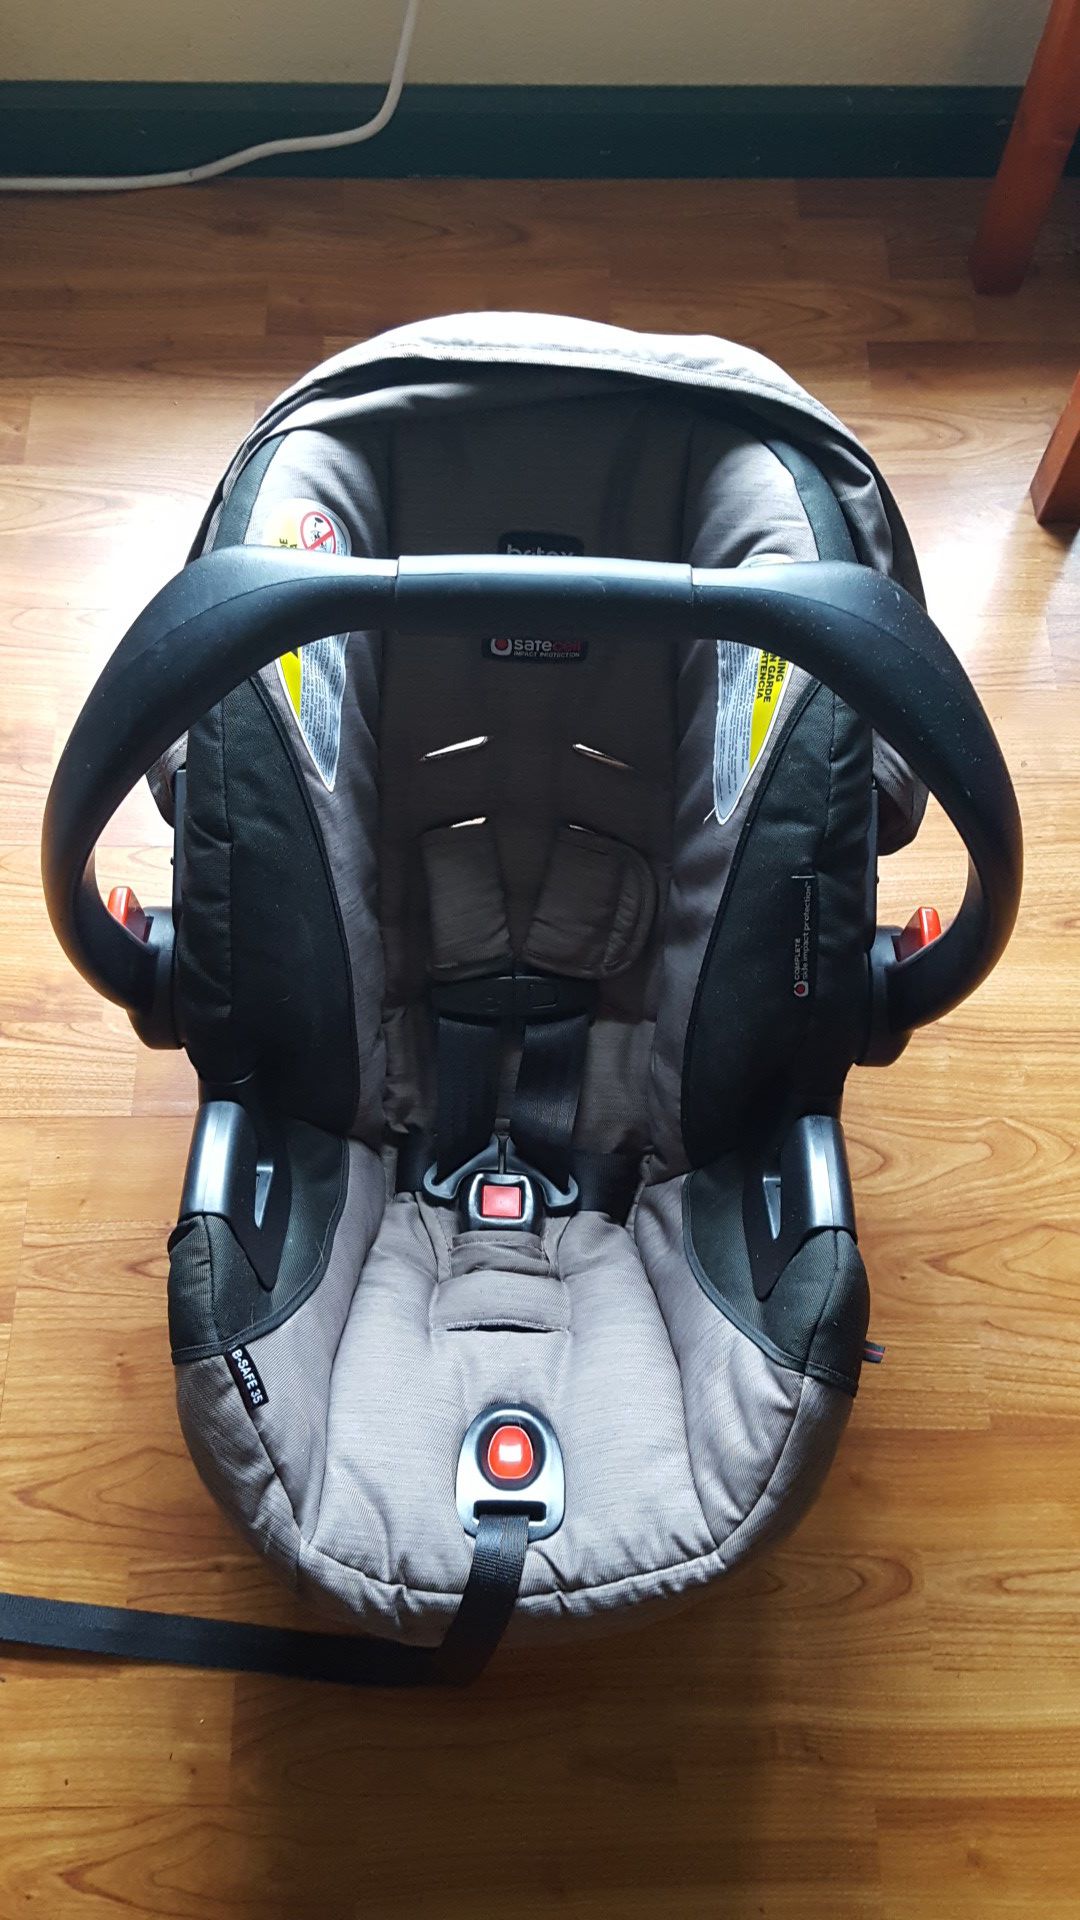 Britax B-safe 35 infant car seat